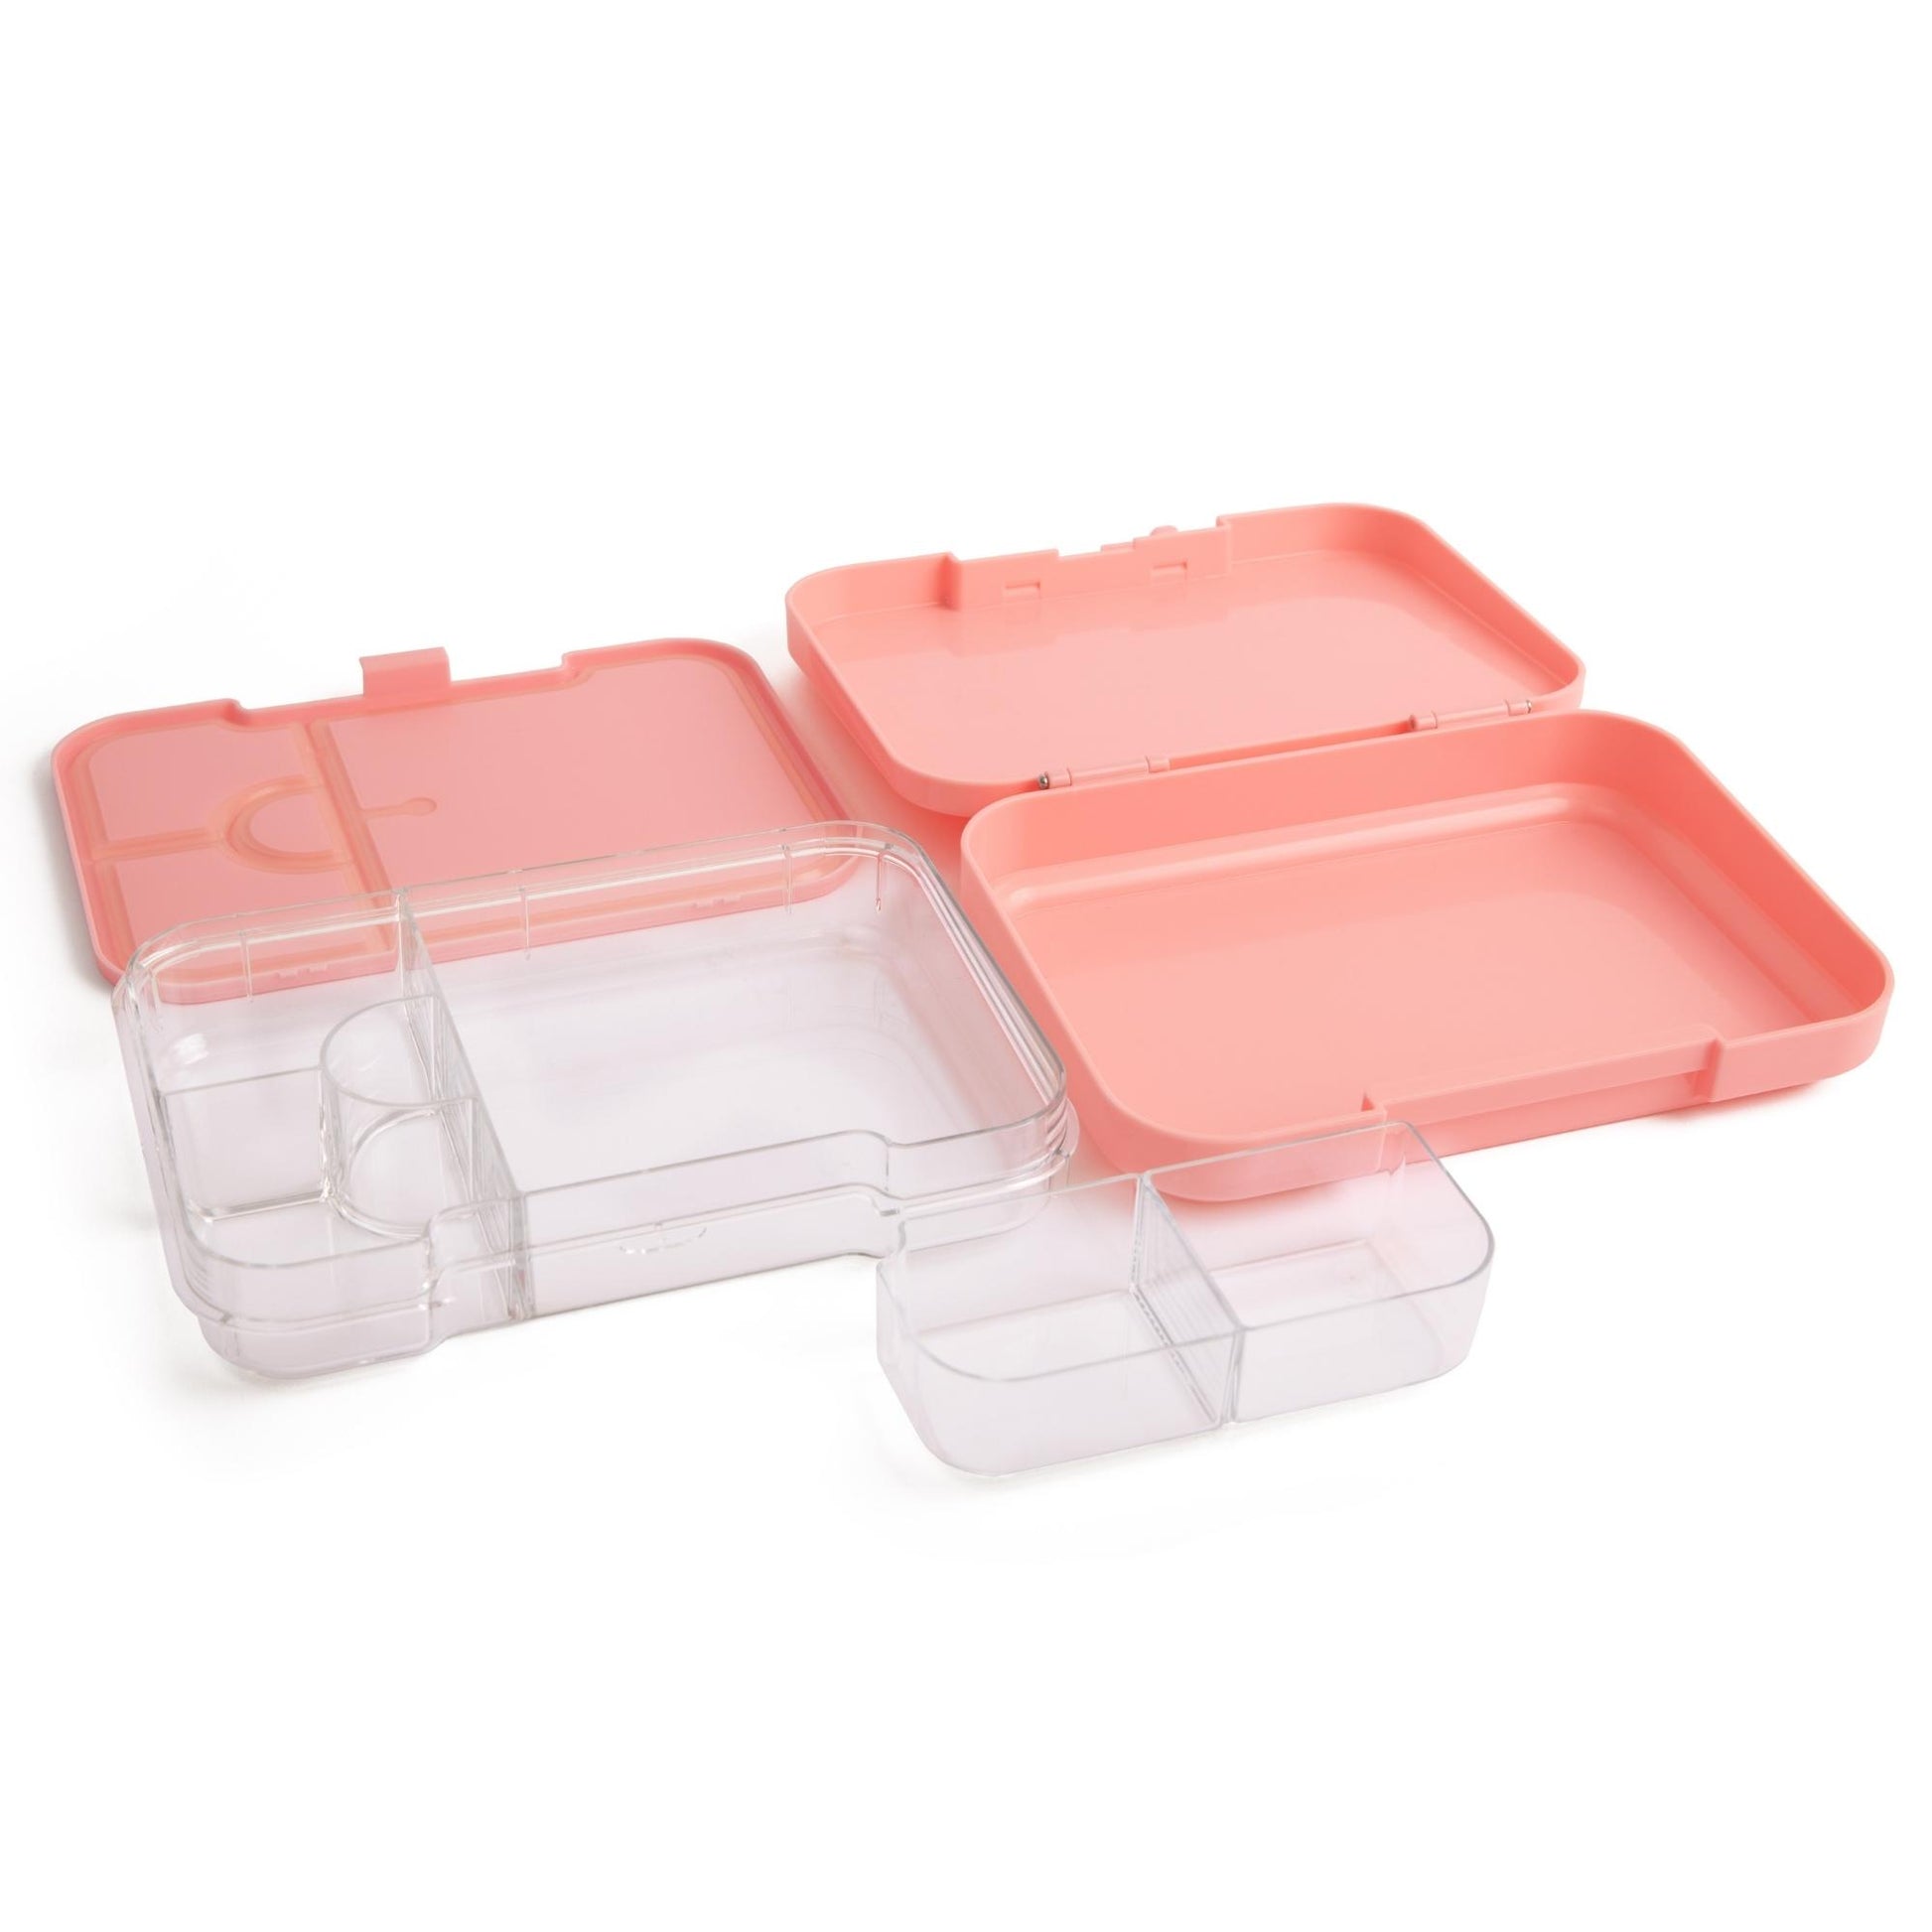 RnemiTe-amo Lunch Box Kids,Bento Lunch Box Container,Bento Box